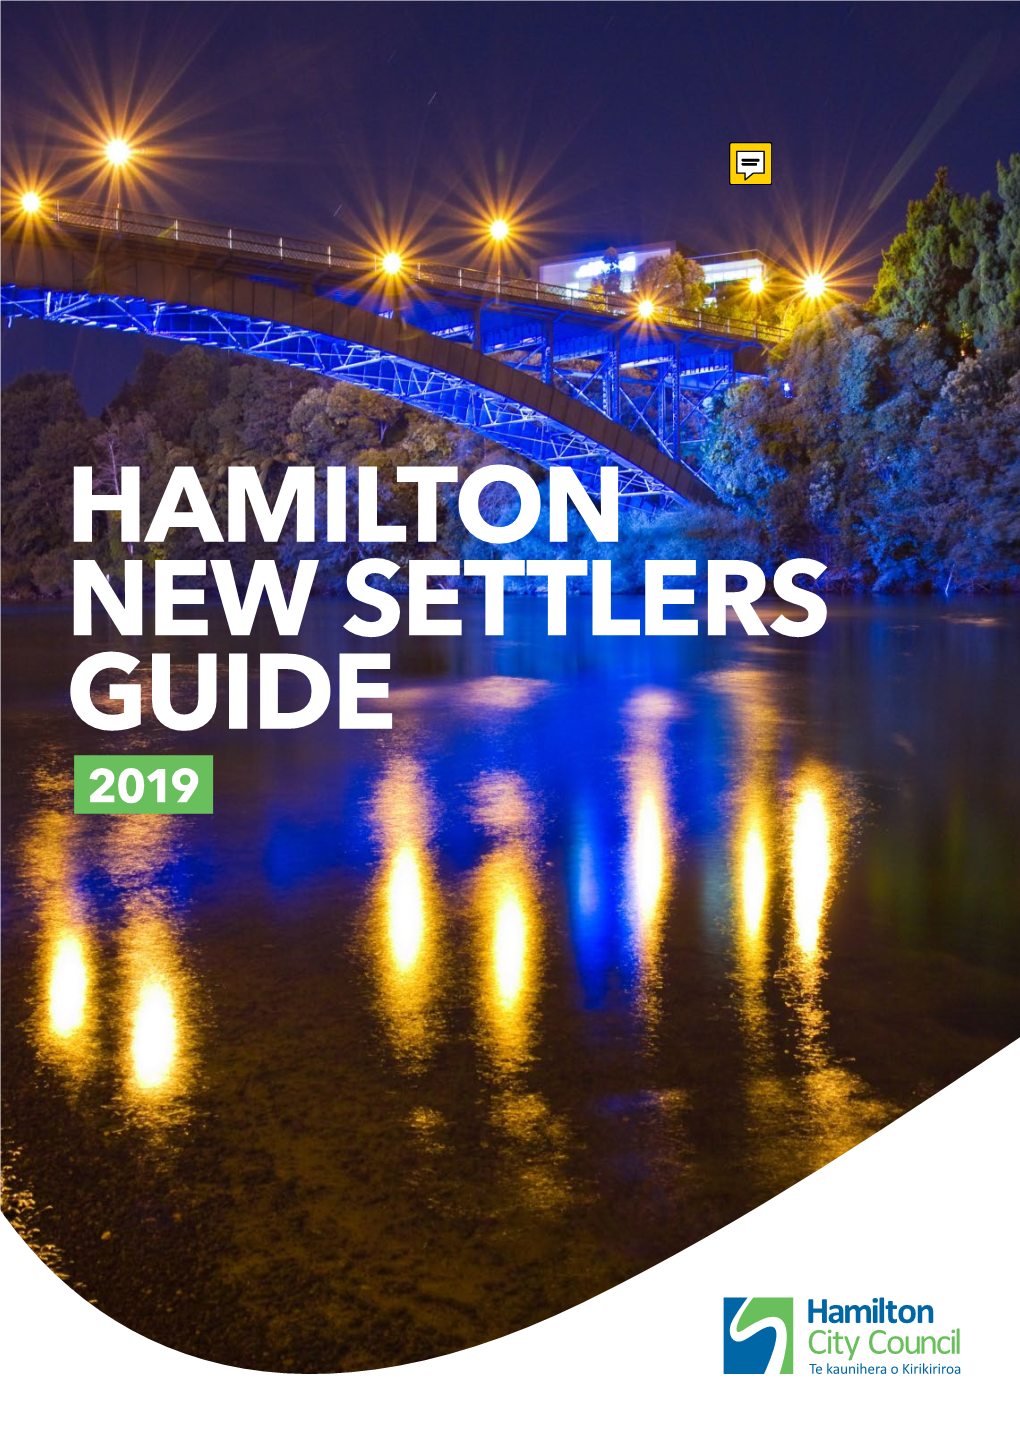 Hamilton New Settlers Guide 2019